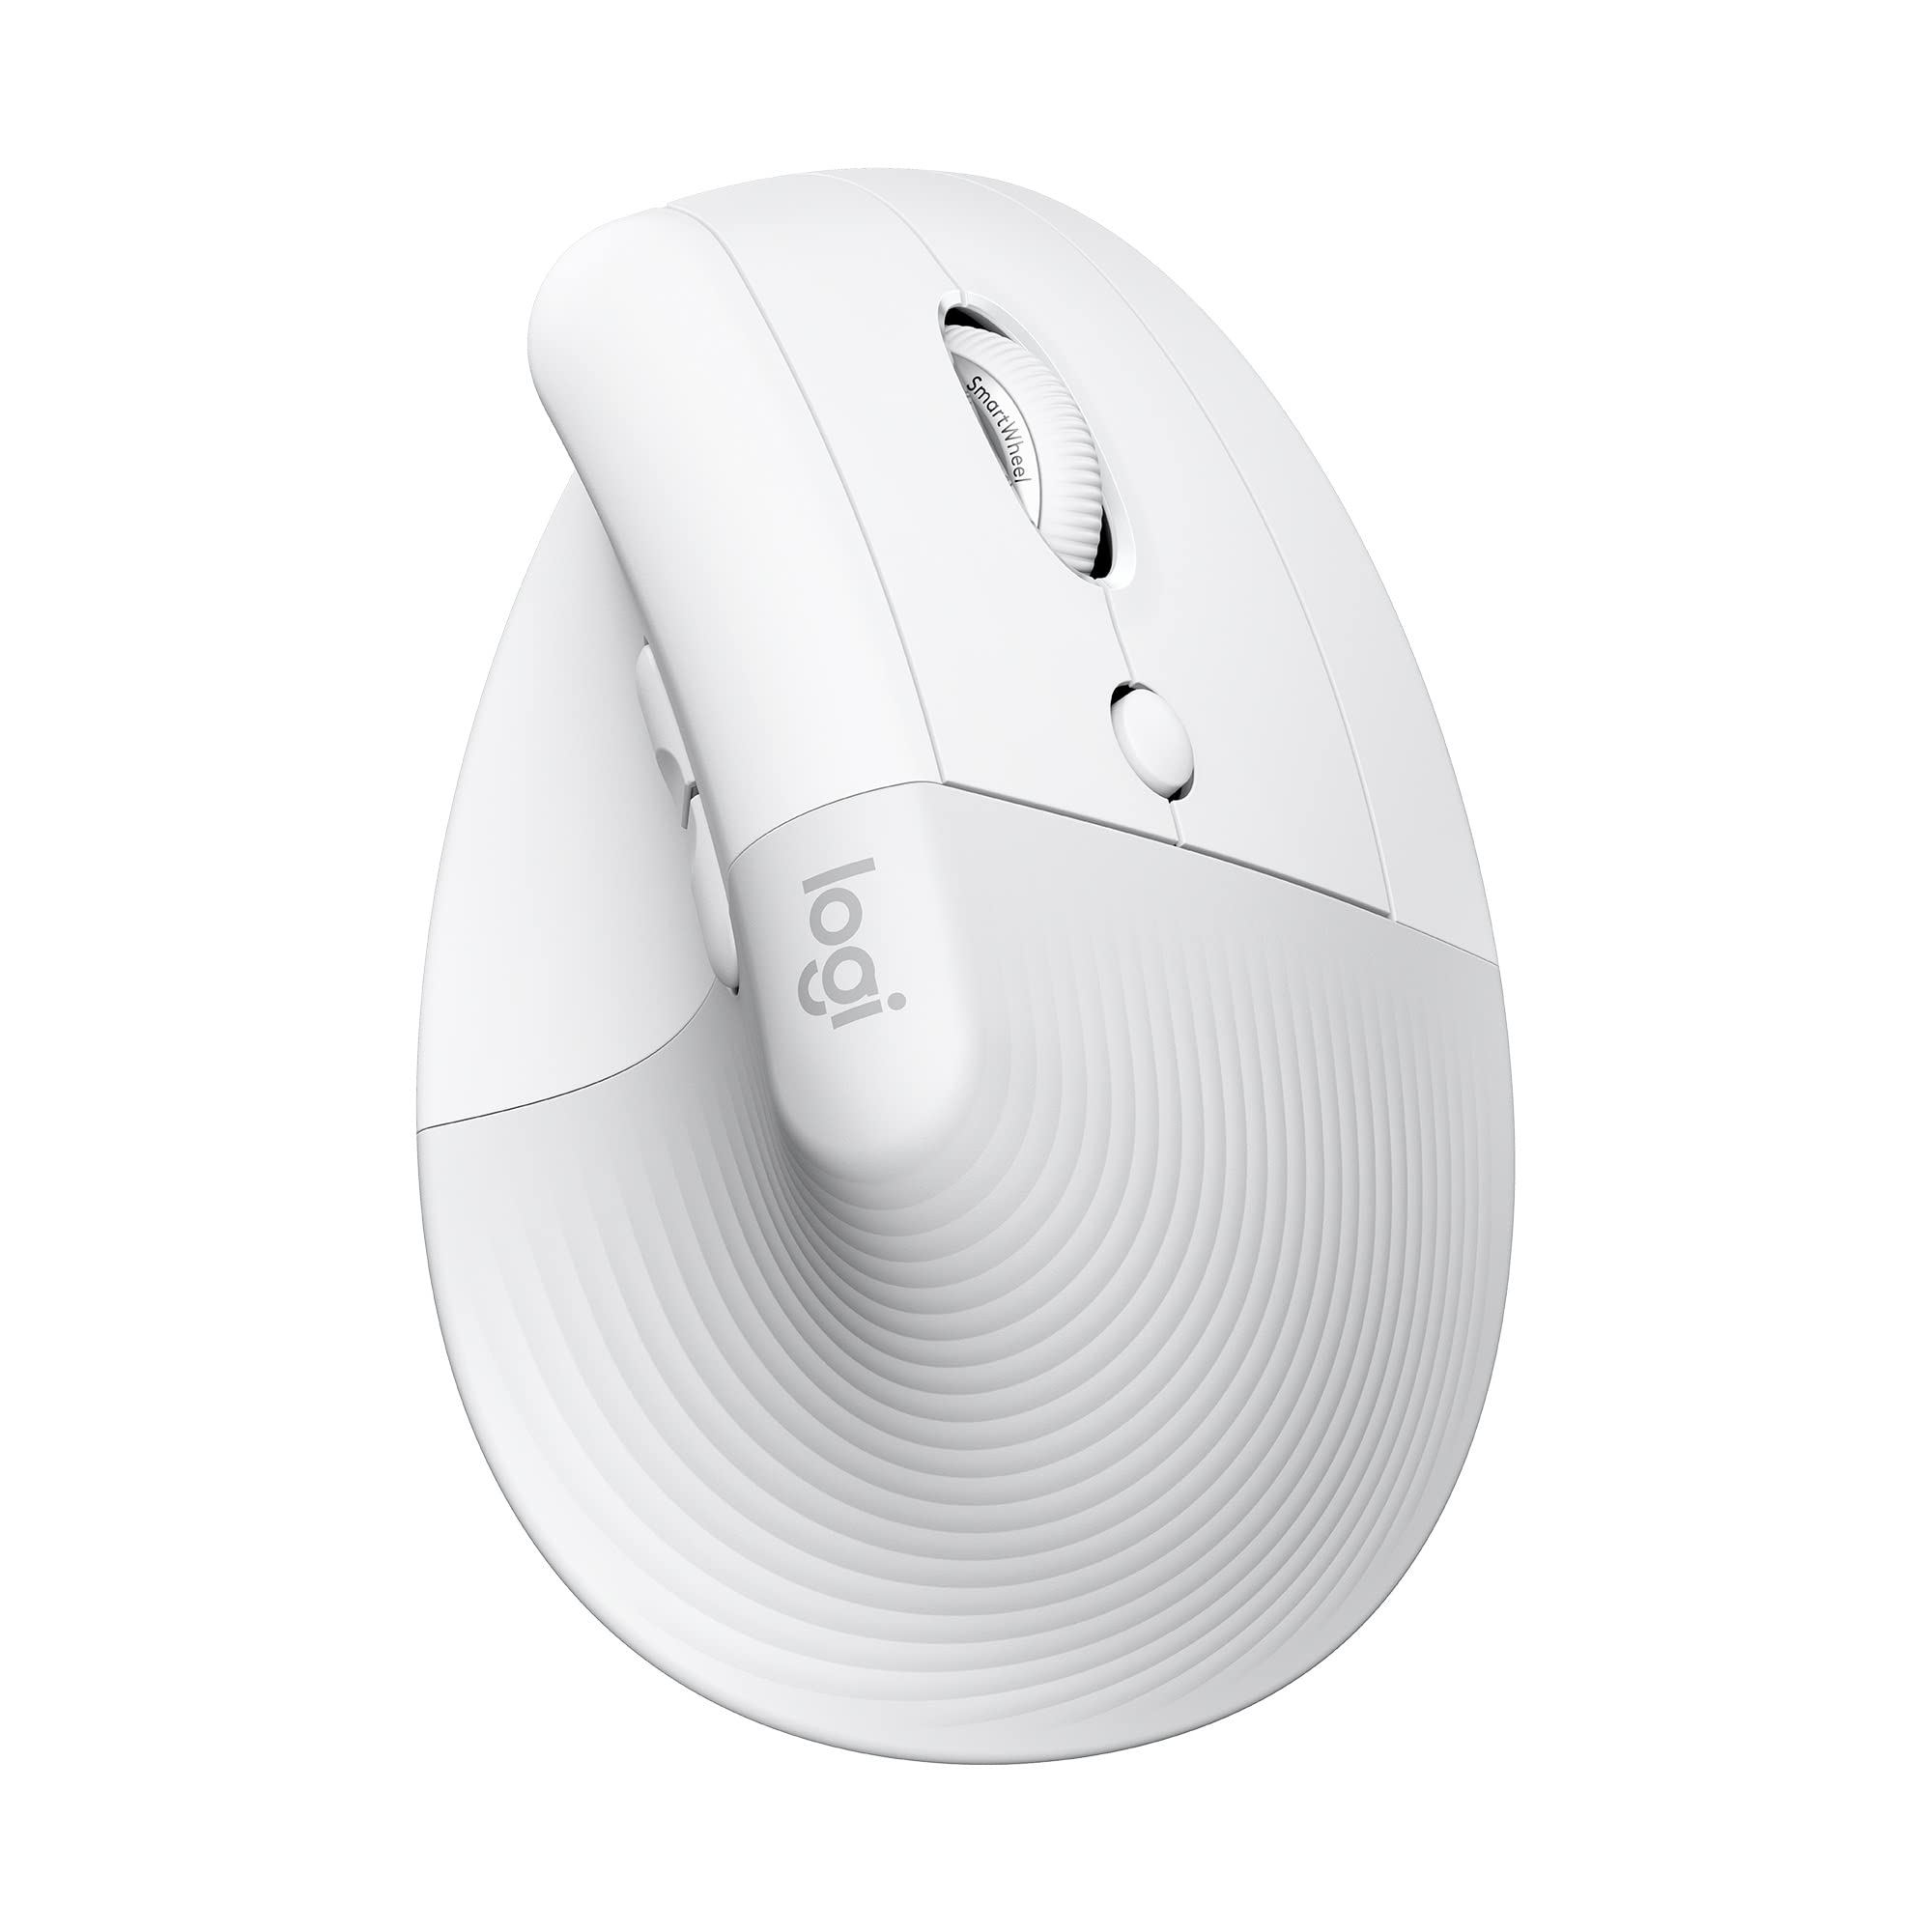 Logitech Lift Vertical Ergonomic Mouse - $55.99 + F/S - Amazon